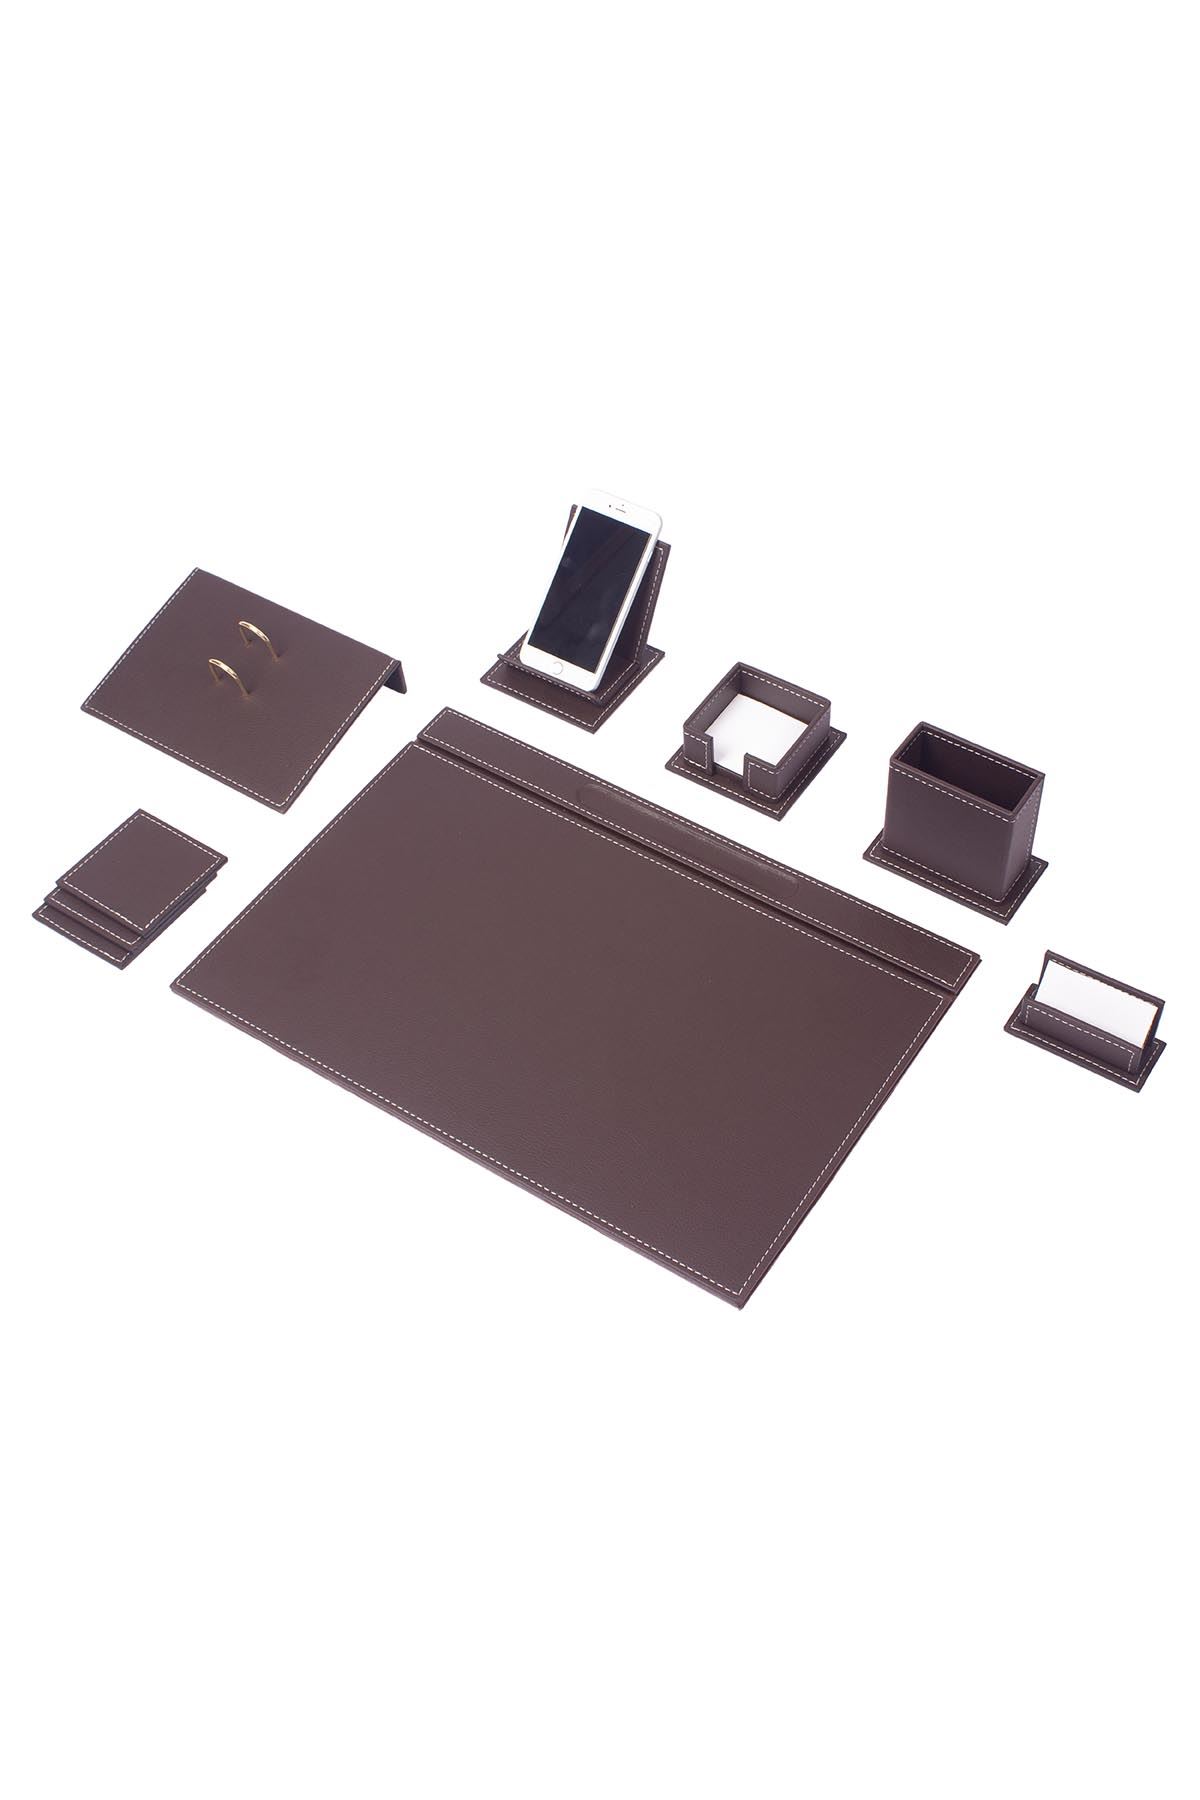 Vega Leather Desk Set Brown 9 Accessories